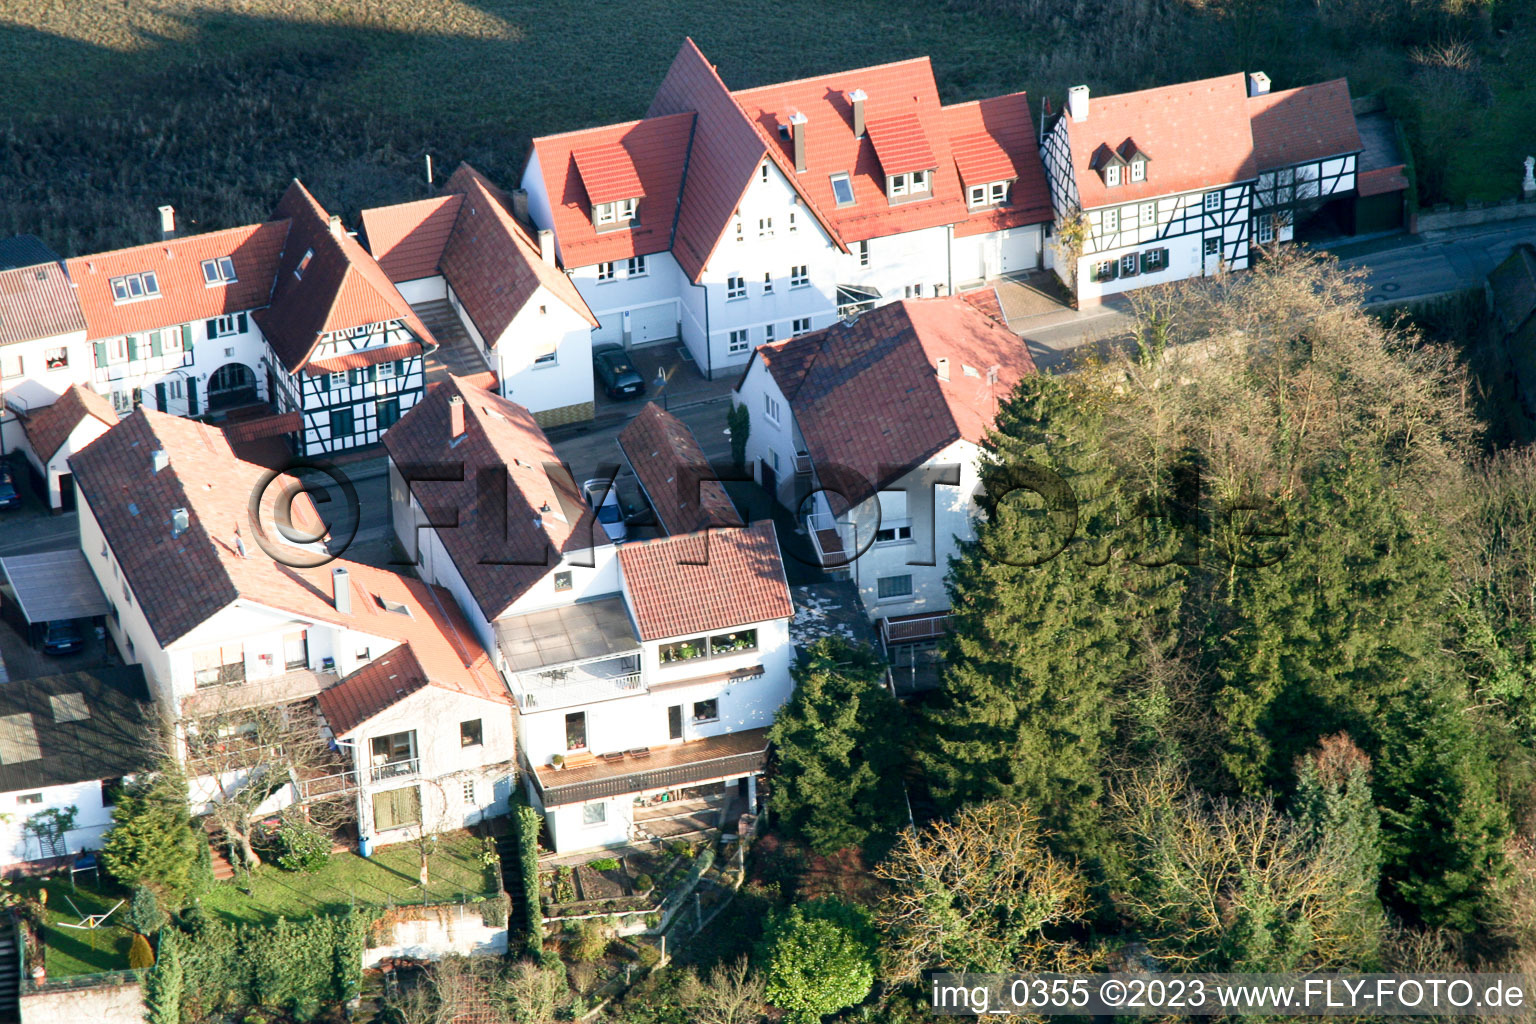 Bird's eye view of Ludwigstr in Jockgrim in the state Rhineland-Palatinate, Germany